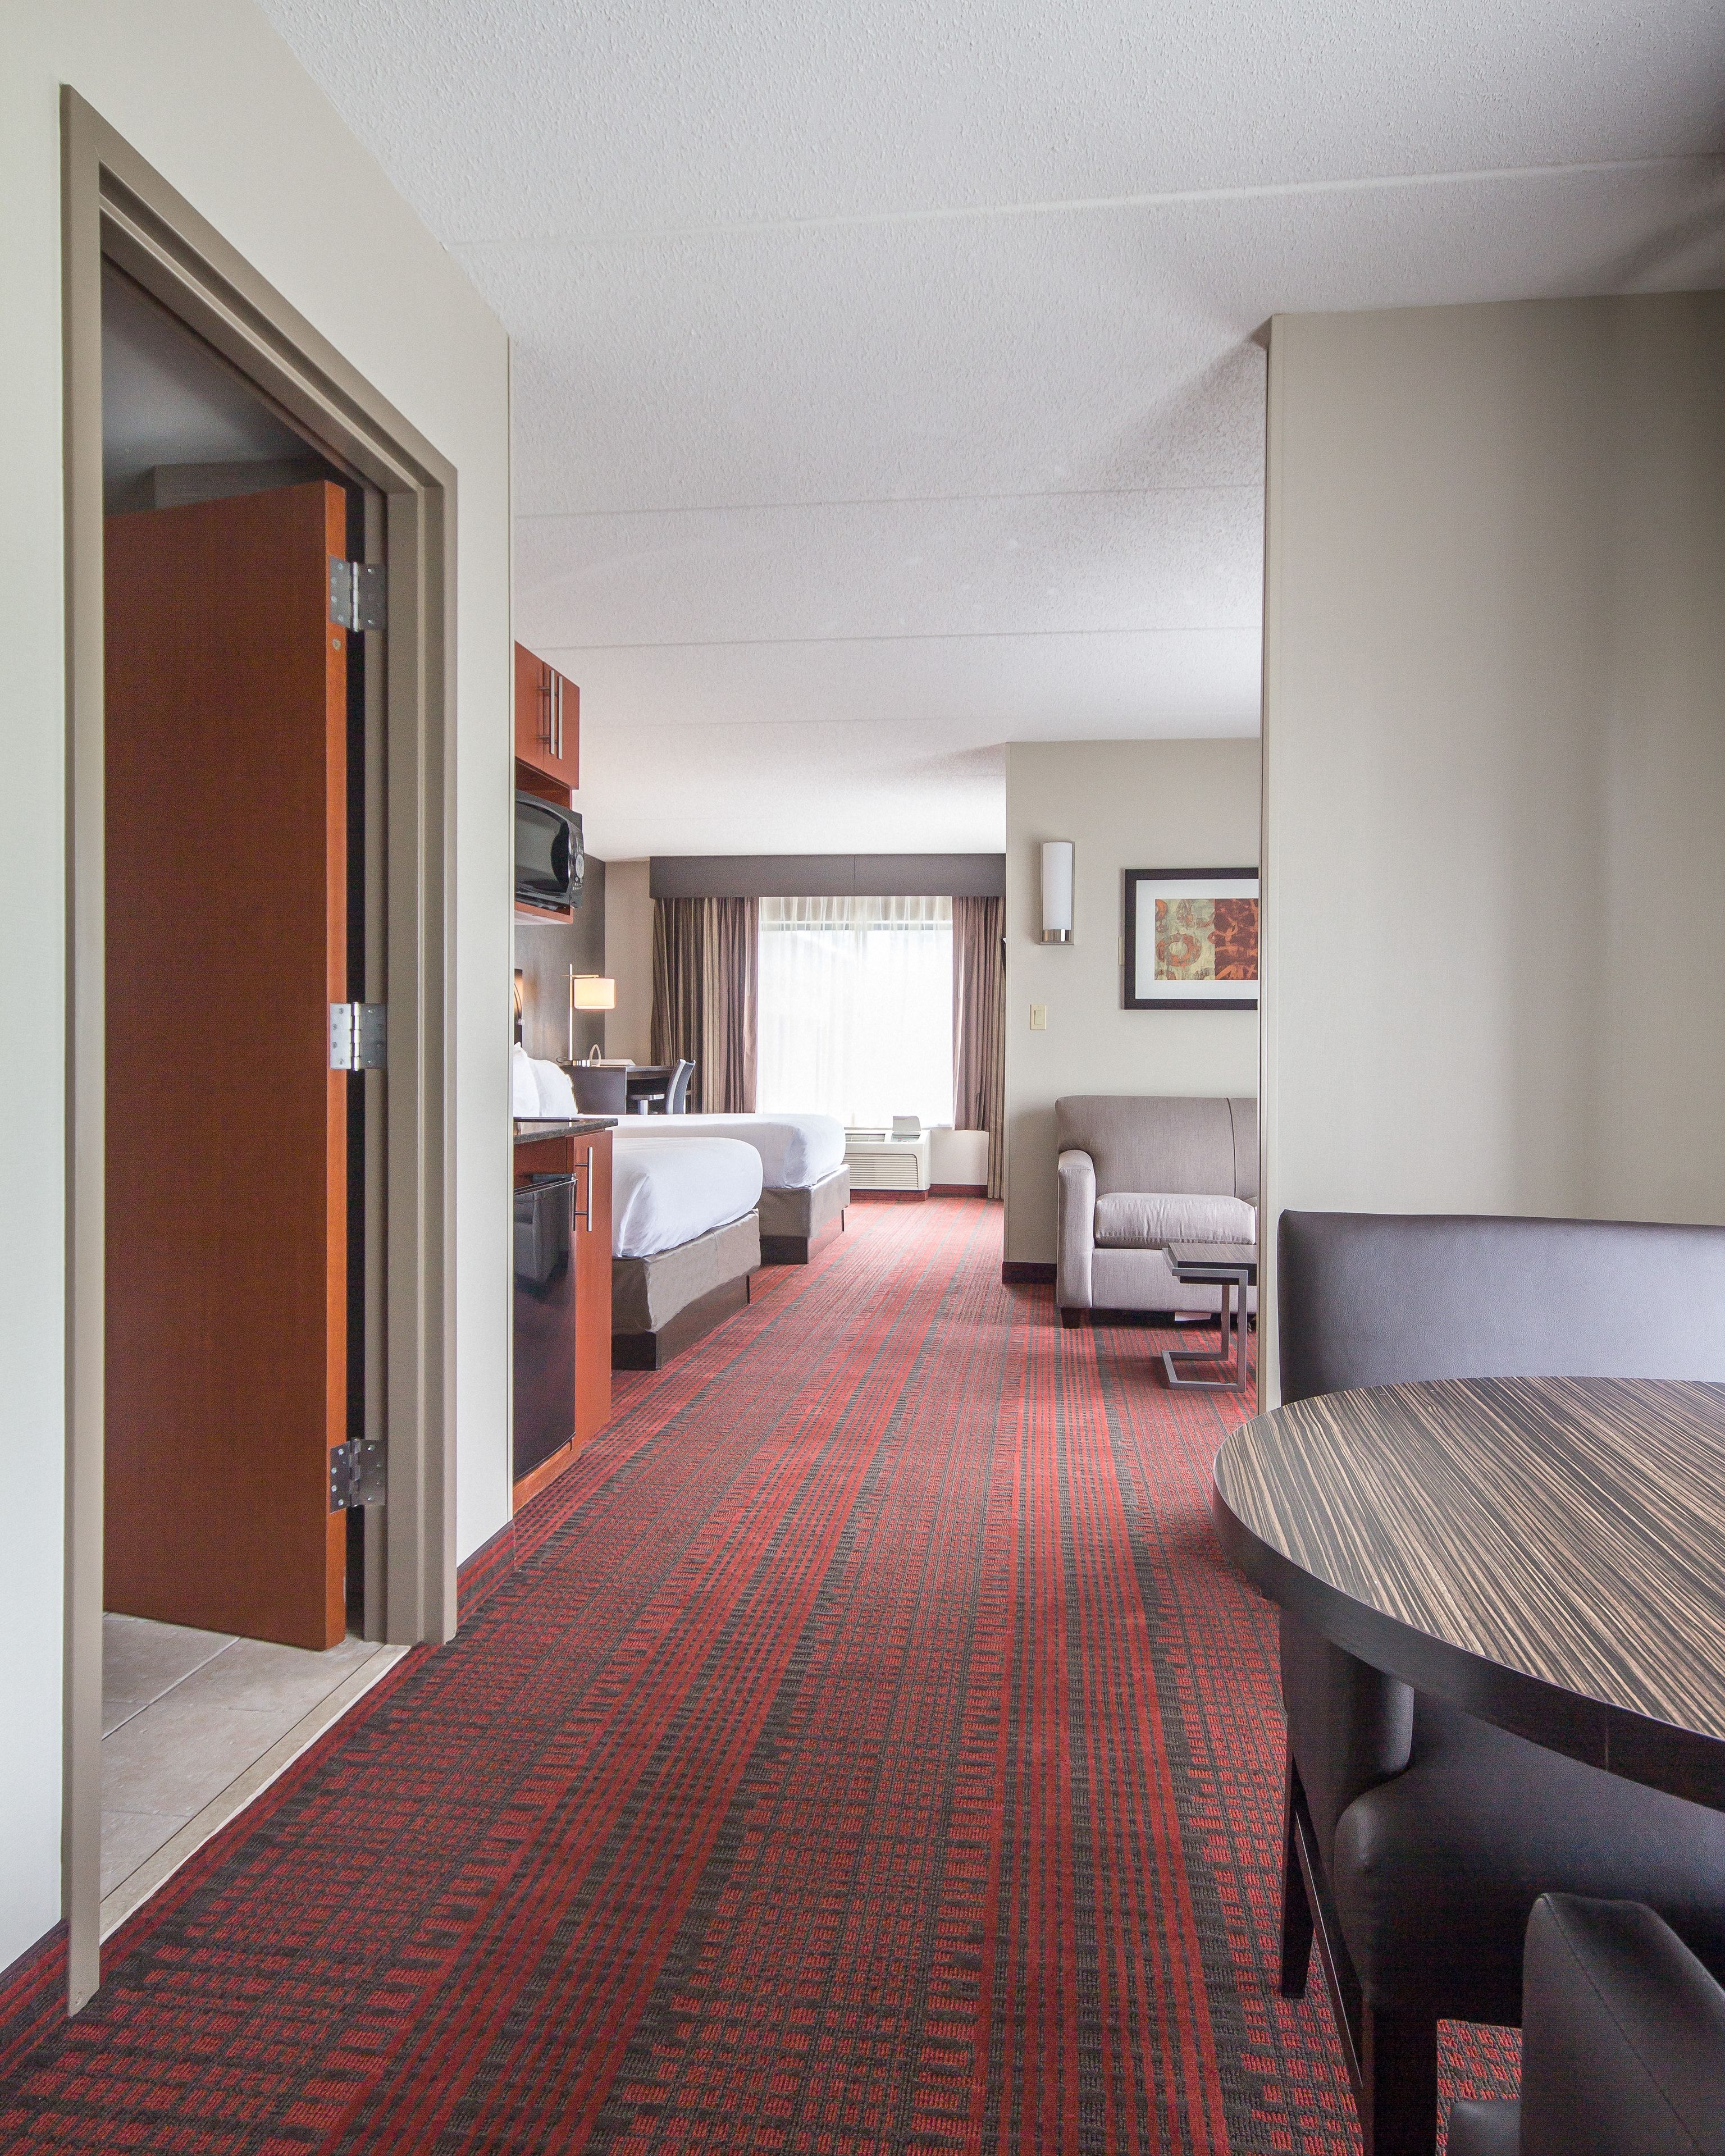 Holiday Inn Express & Suites Auburn